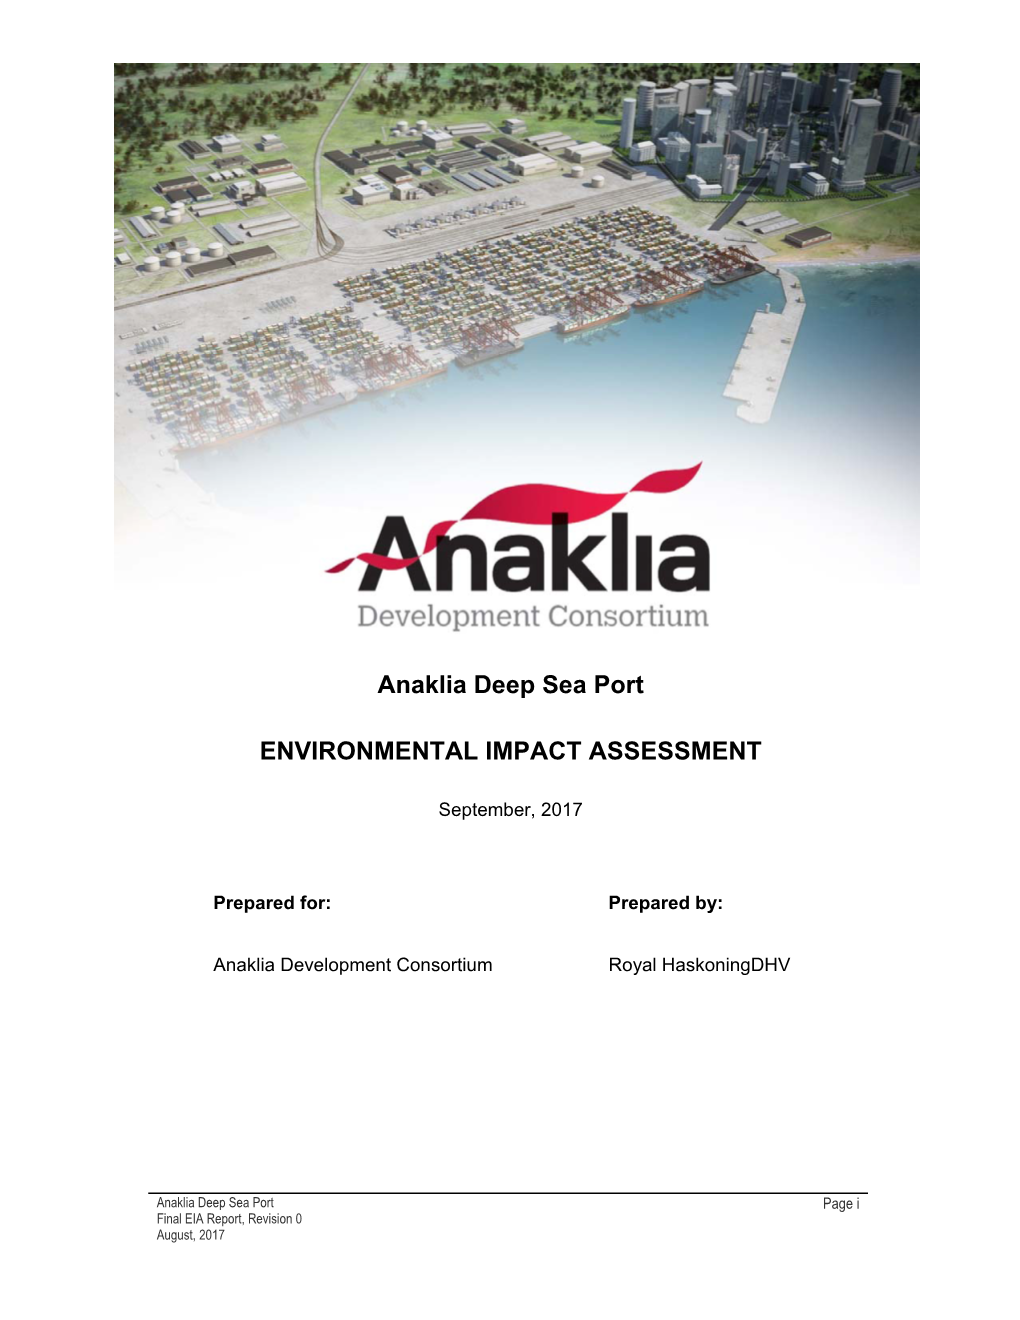 Anaklia Deep Sea Port Environmental Impact Assessment